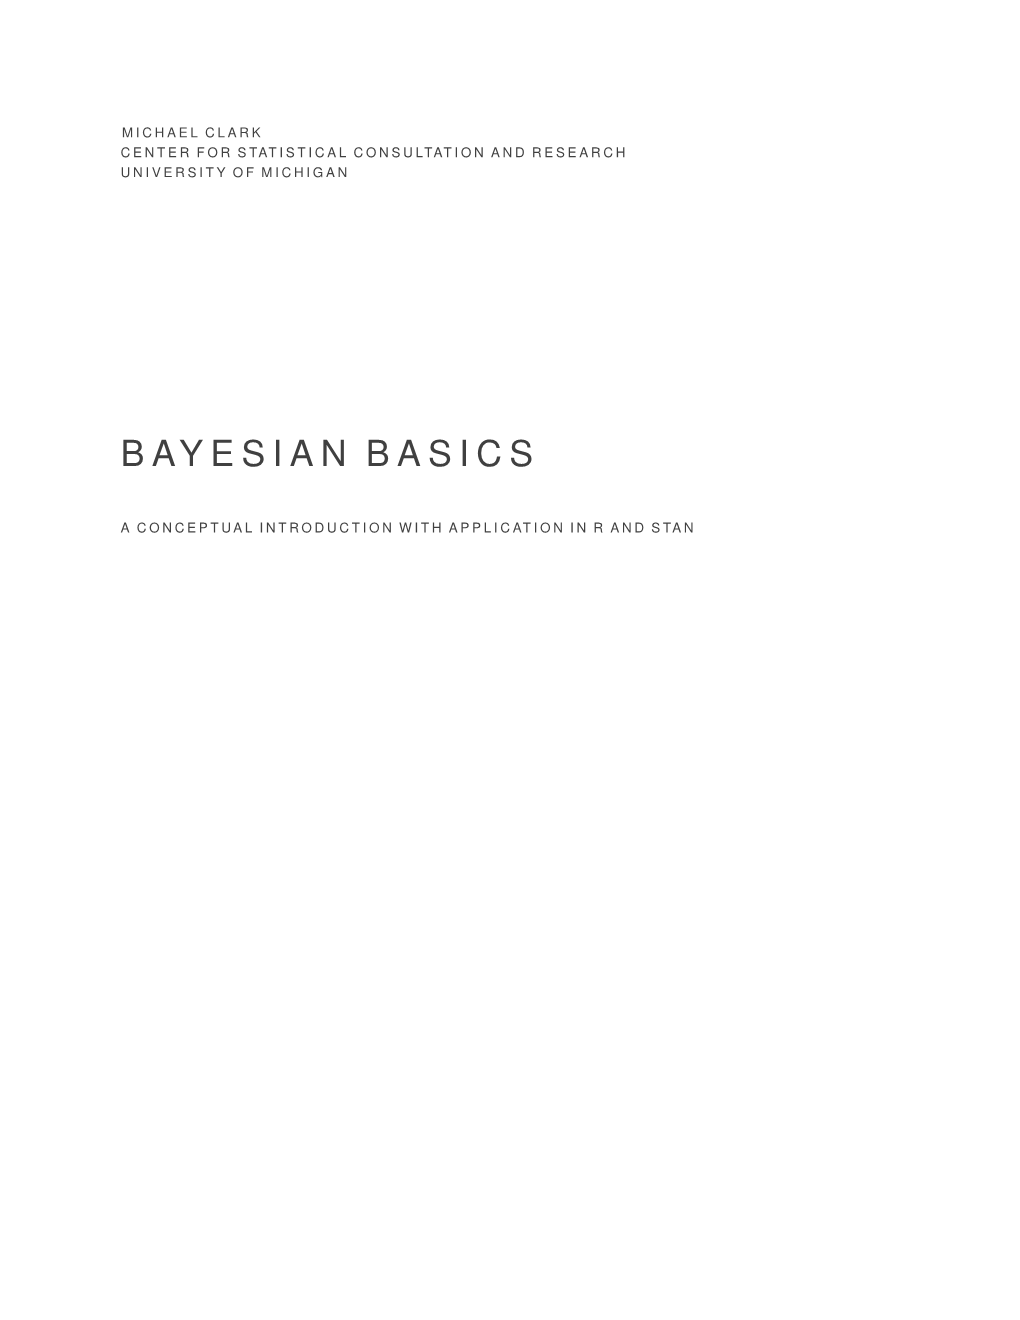 Bayesian Basics 2